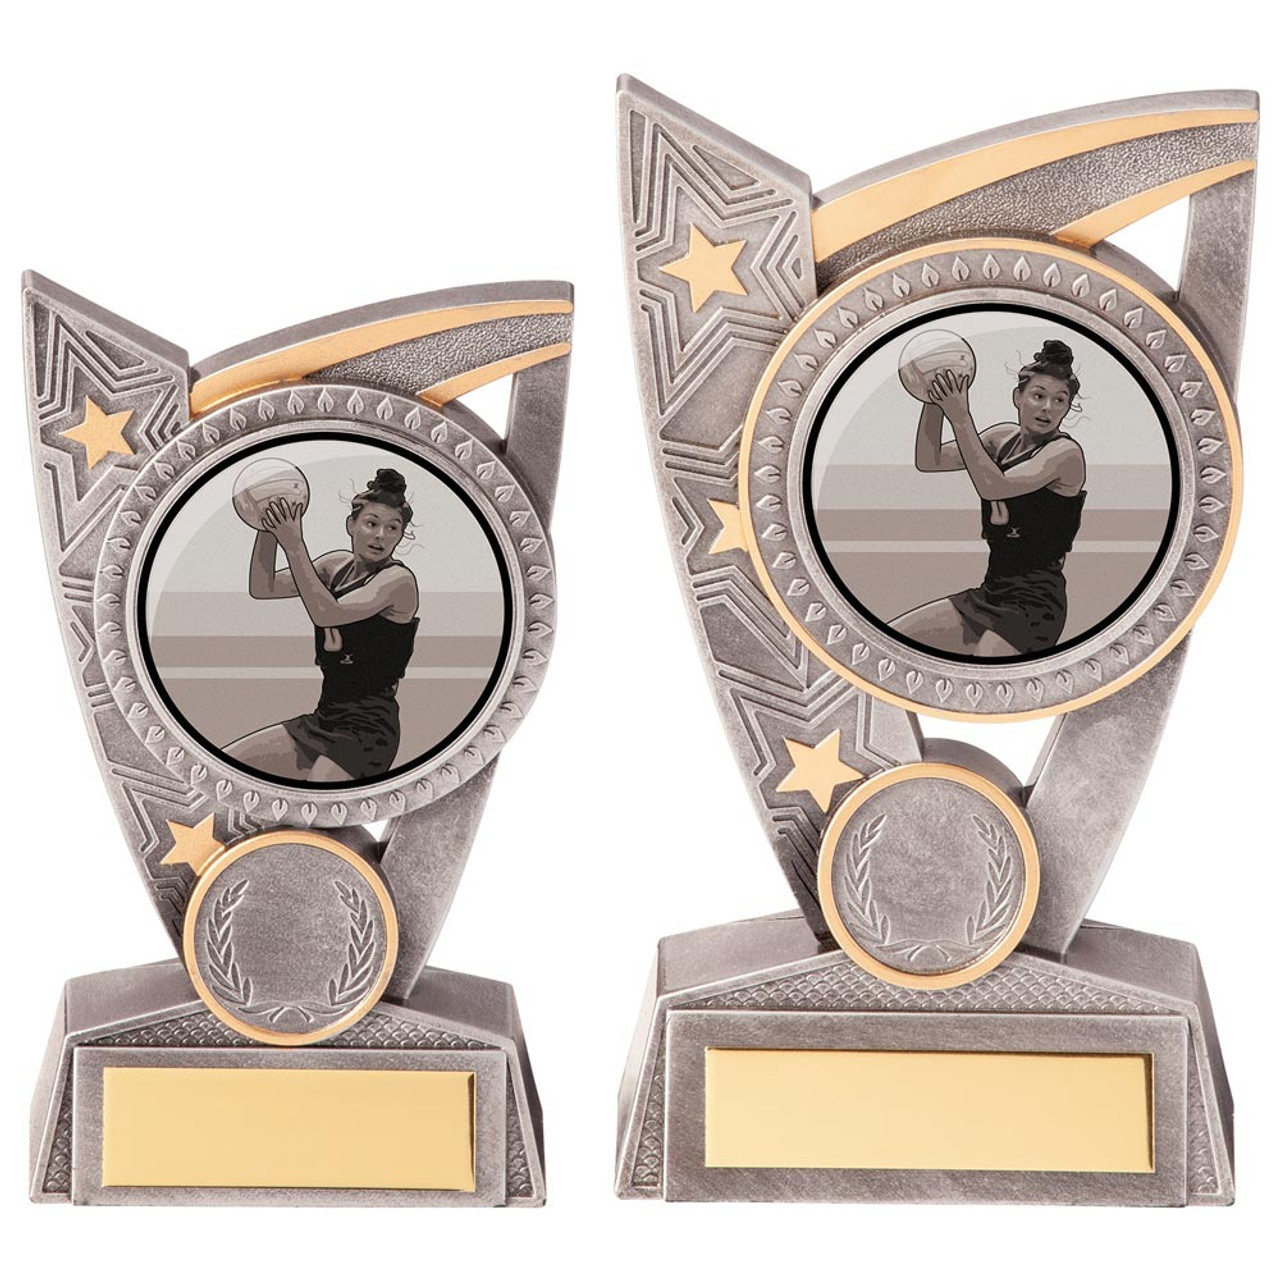 Netball Silver & Gold Triumph Award EN Trophy